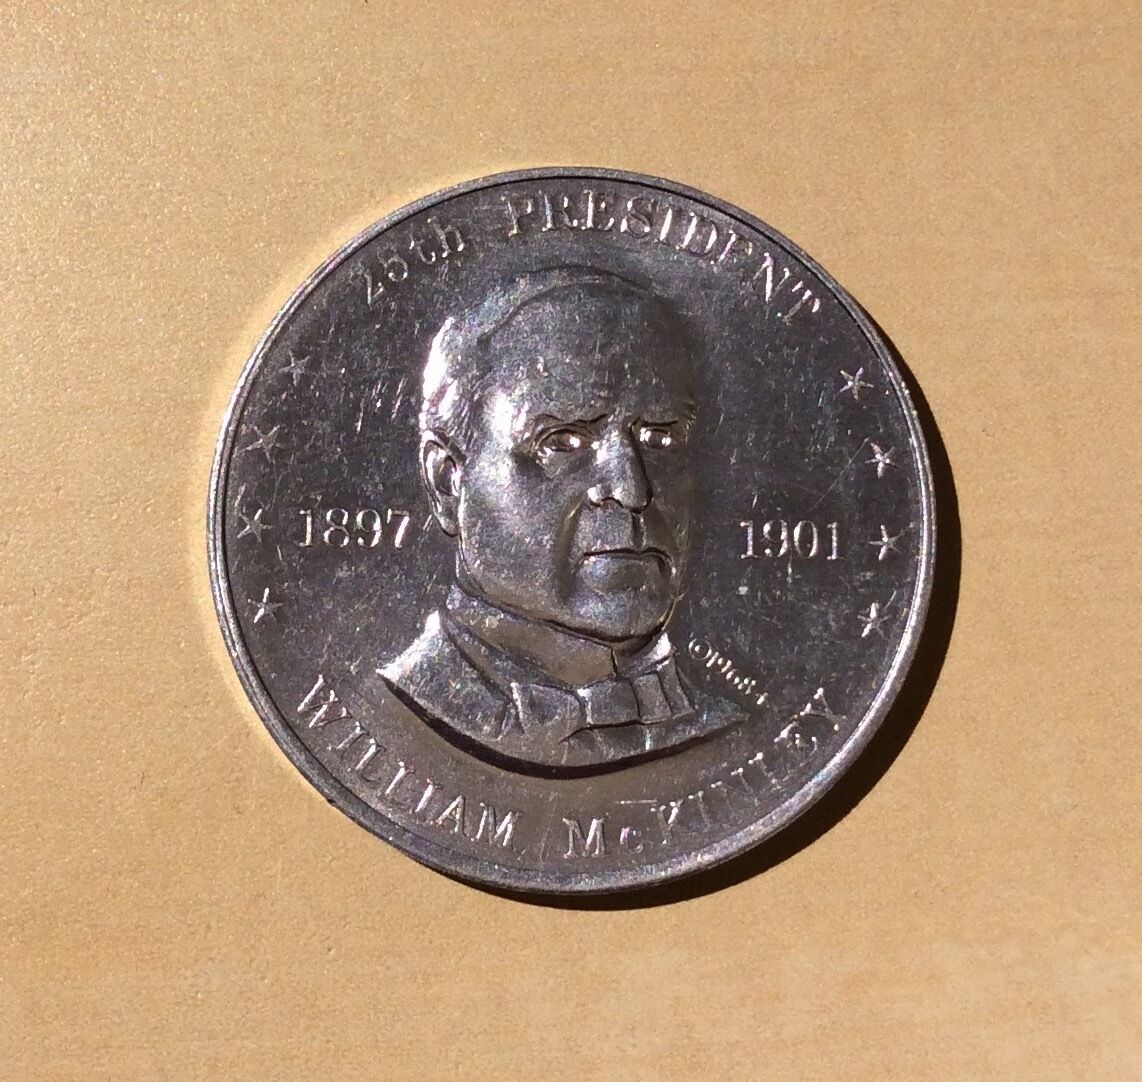 Shell's Mr. President Coin Game William McKinley 25th President (1968) Medal